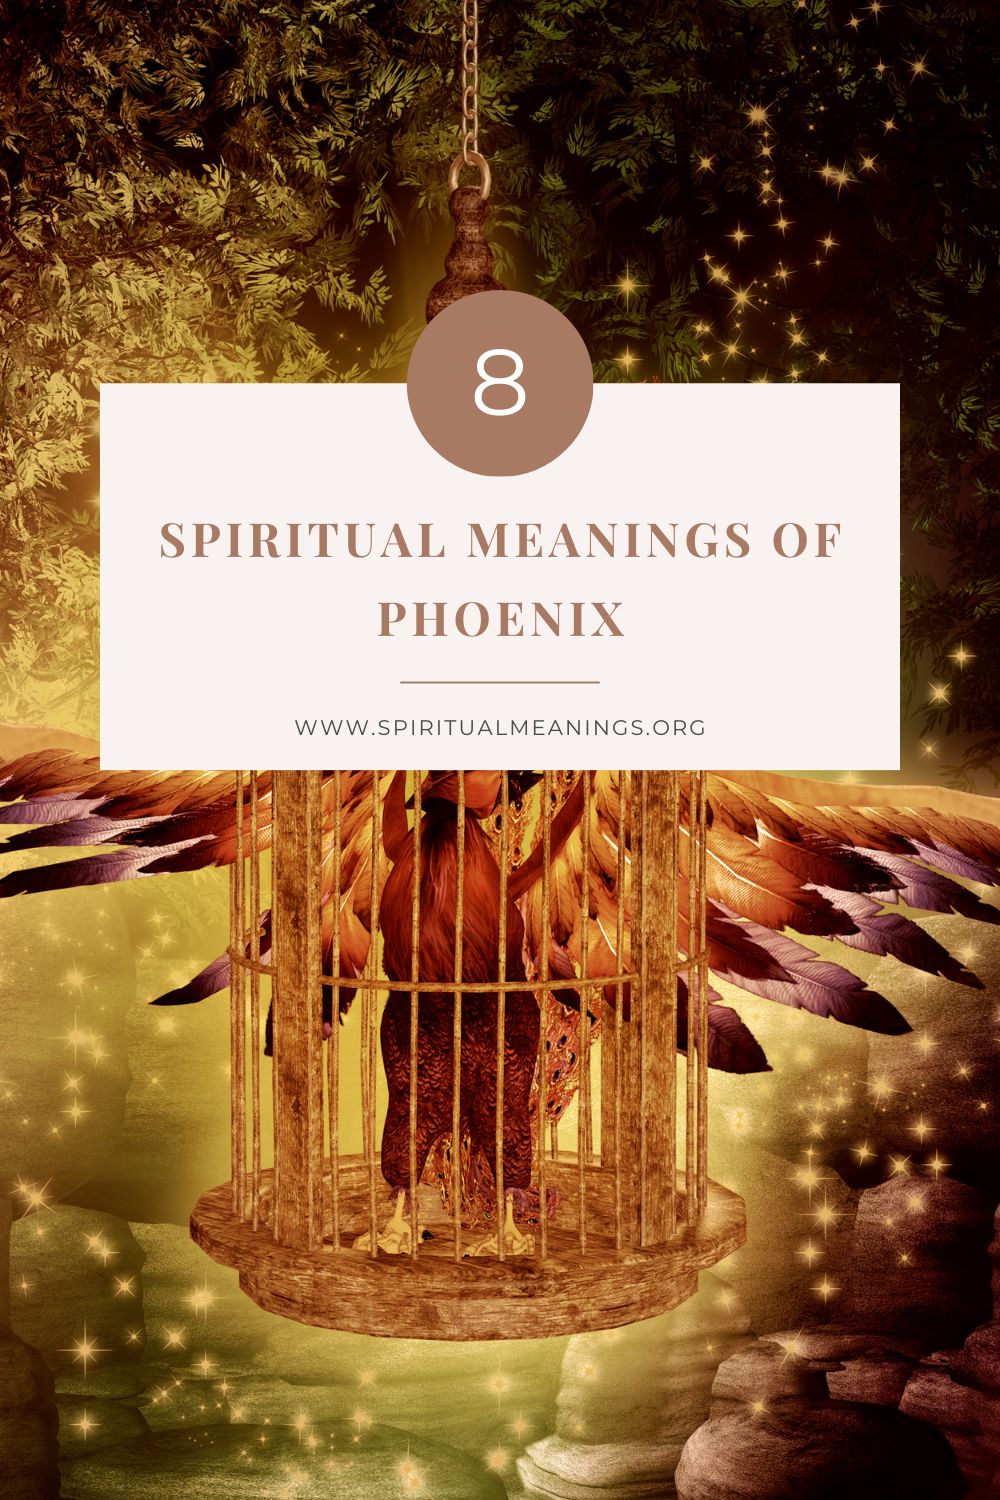 The Universal Symbolism of the Phoenix